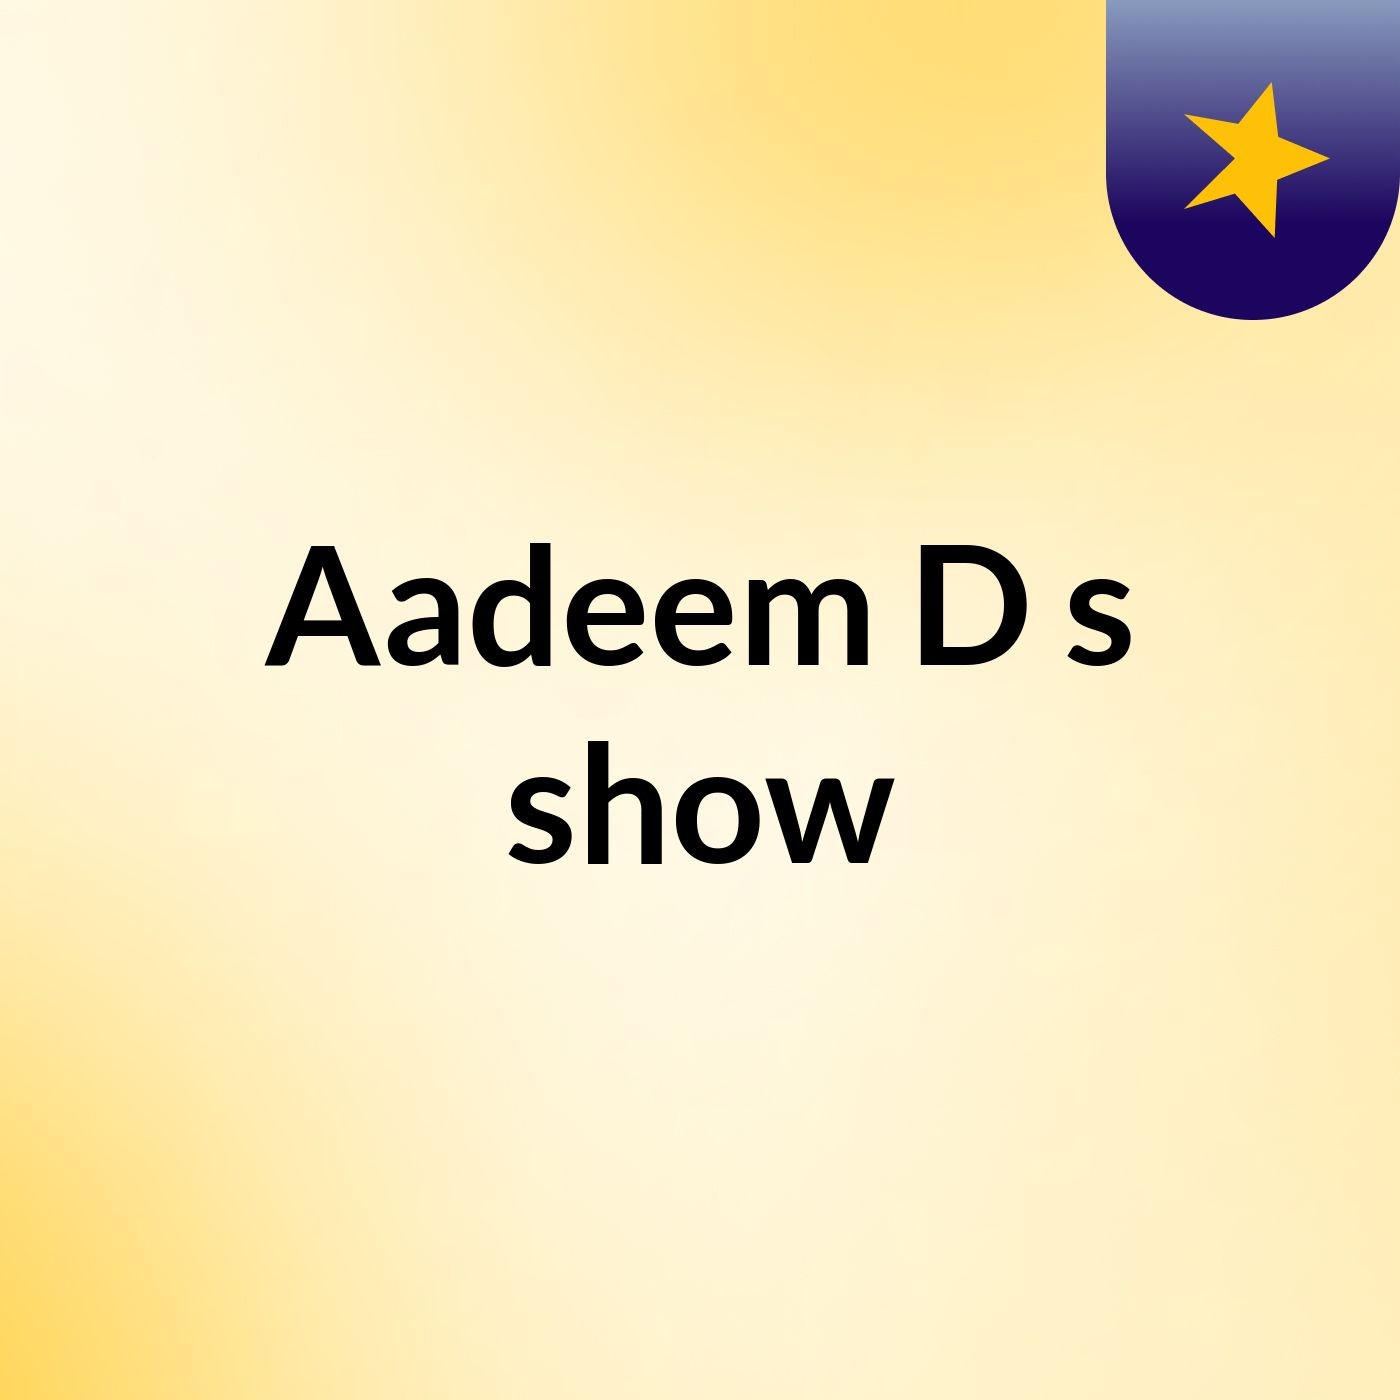 Aadeem D's show